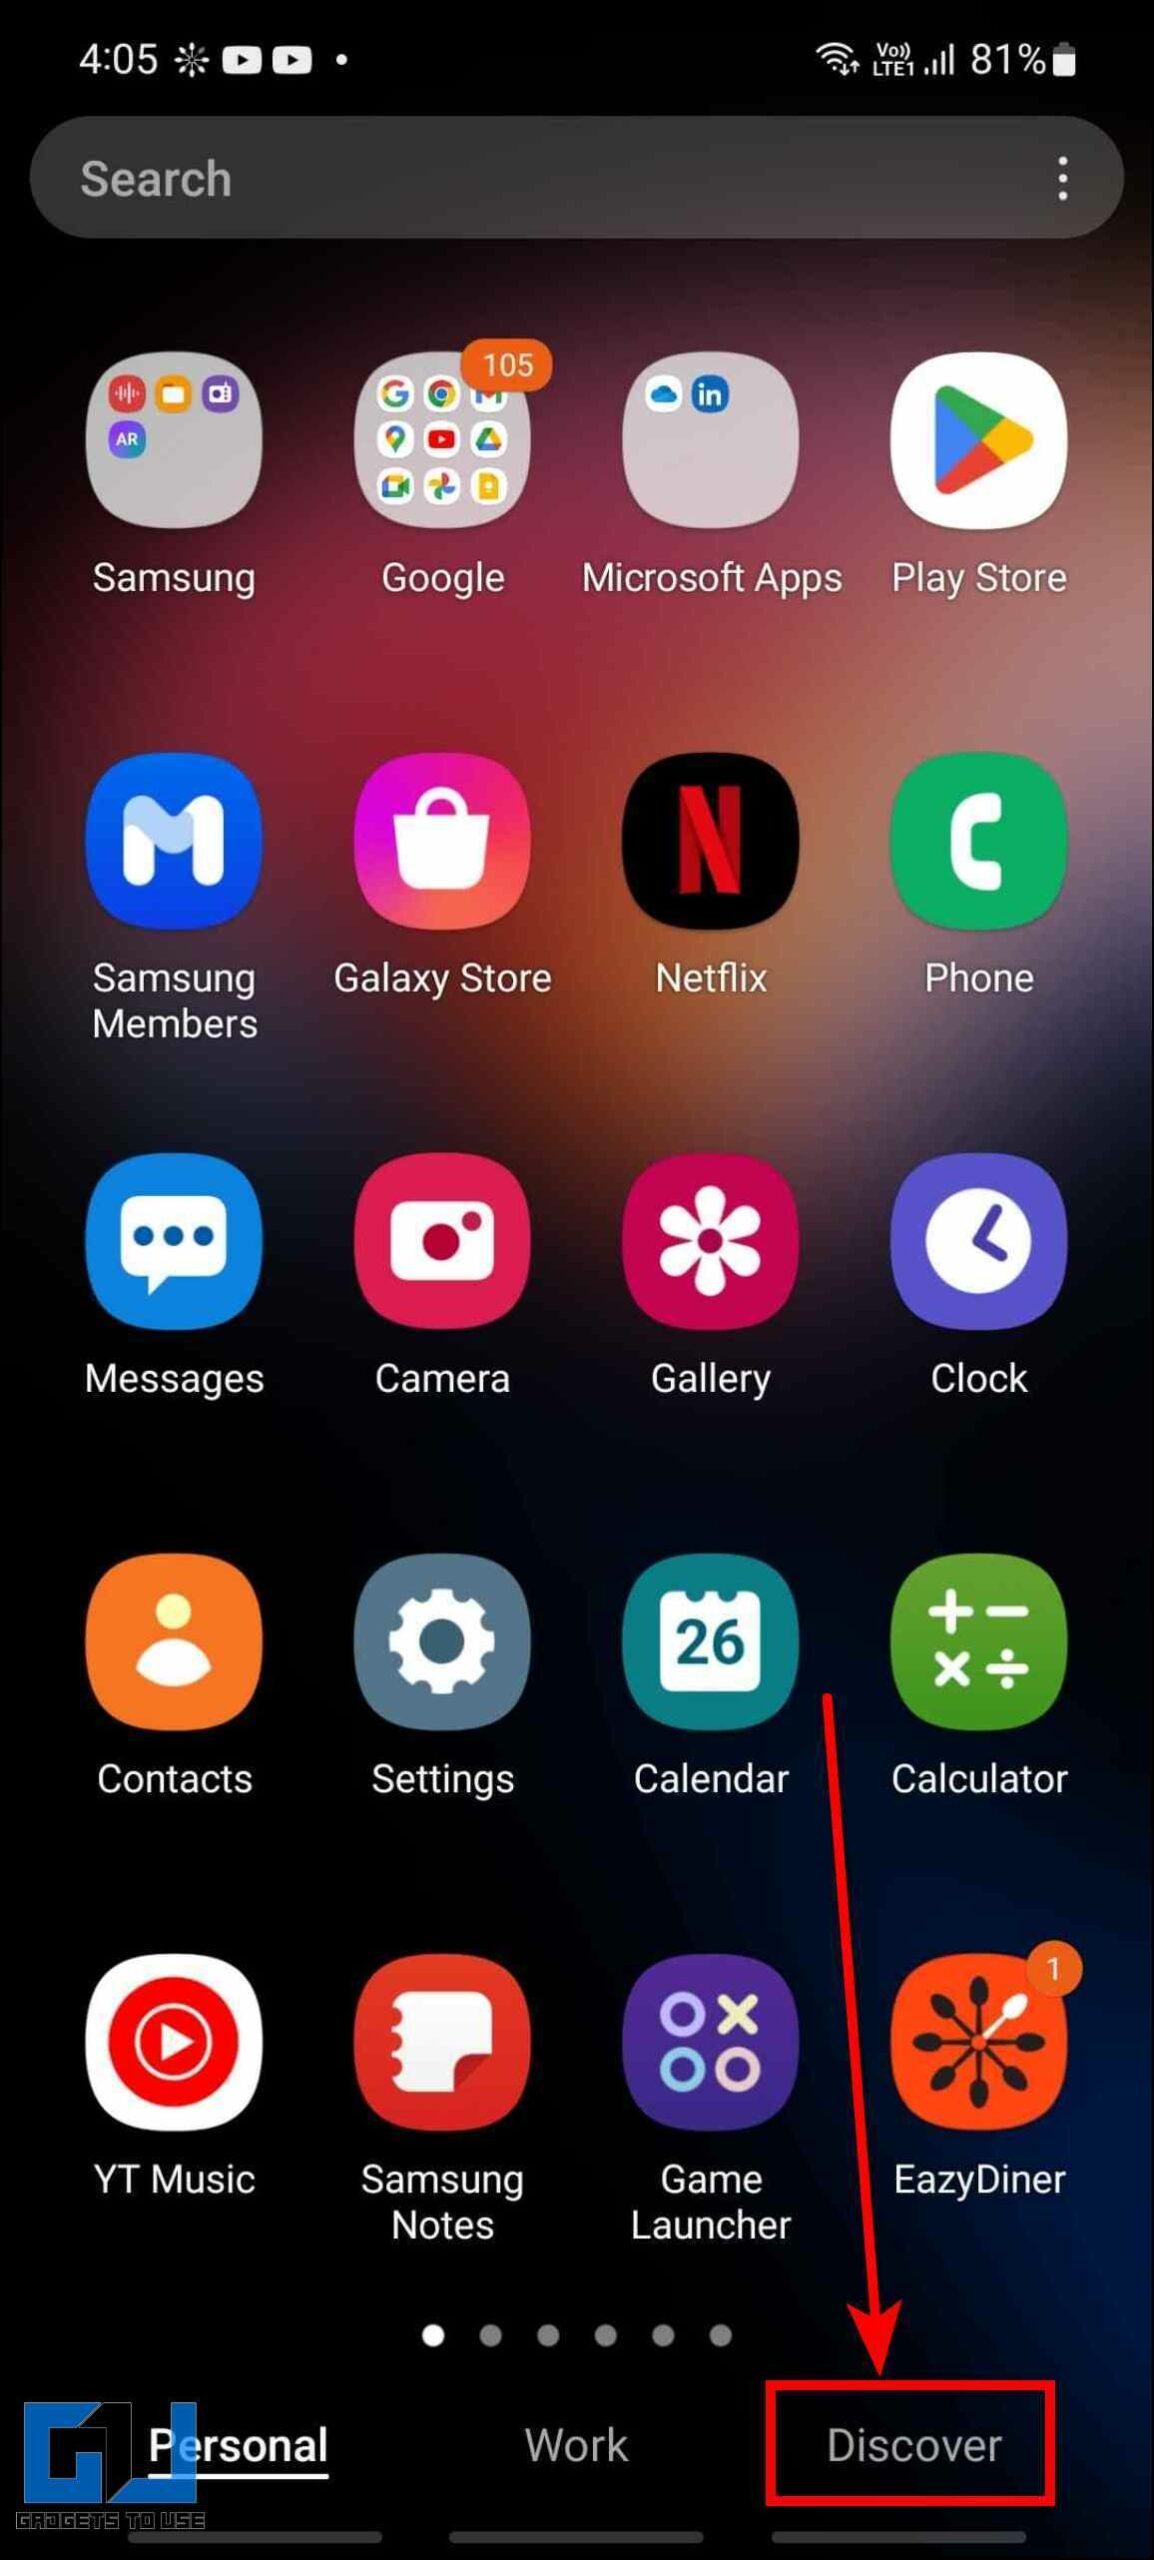 Samsung Phone Discover Tab